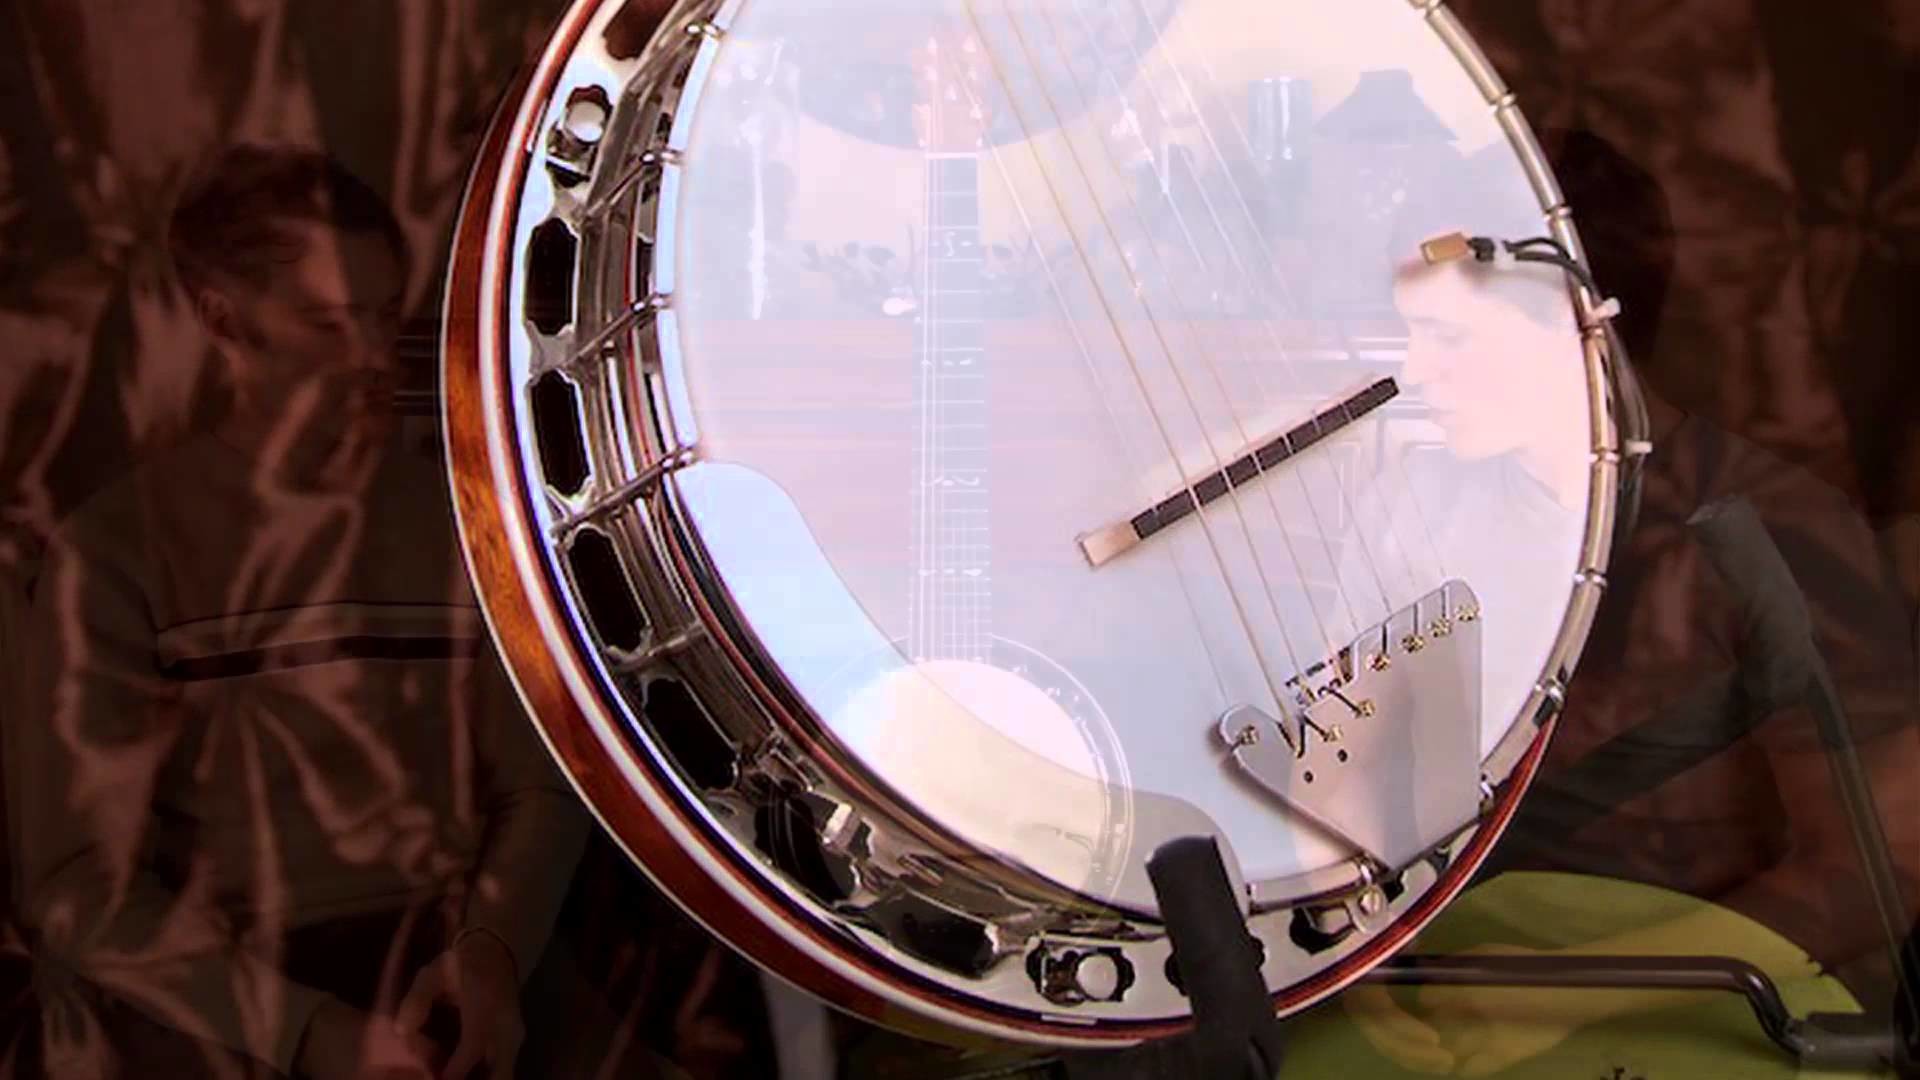 1920x1080 The Saffell Infinity 8-String Banjo